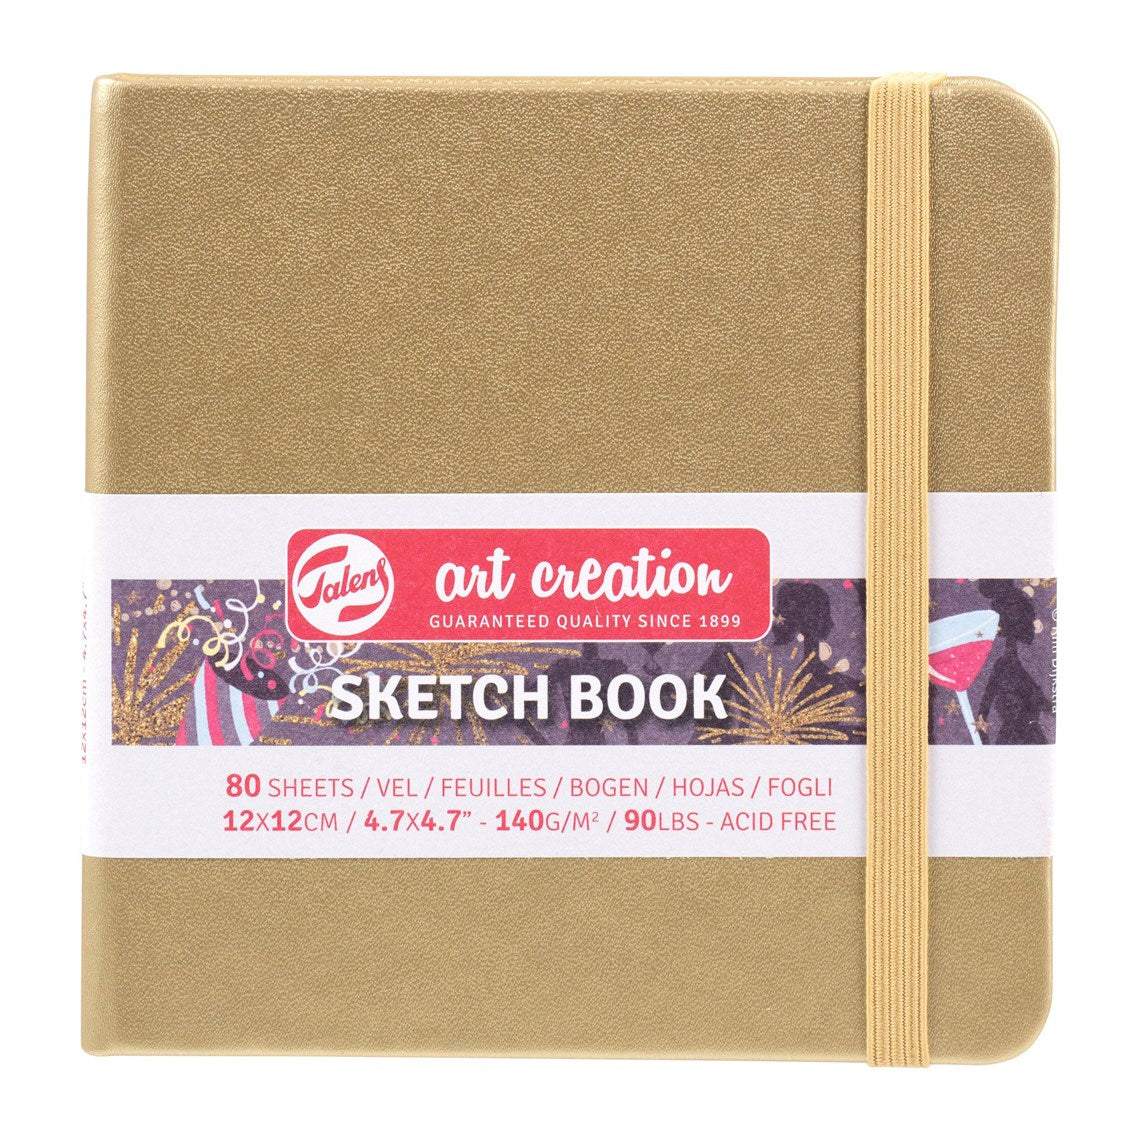 Art Creation Sketchbook - Black 5.1 x 8.3